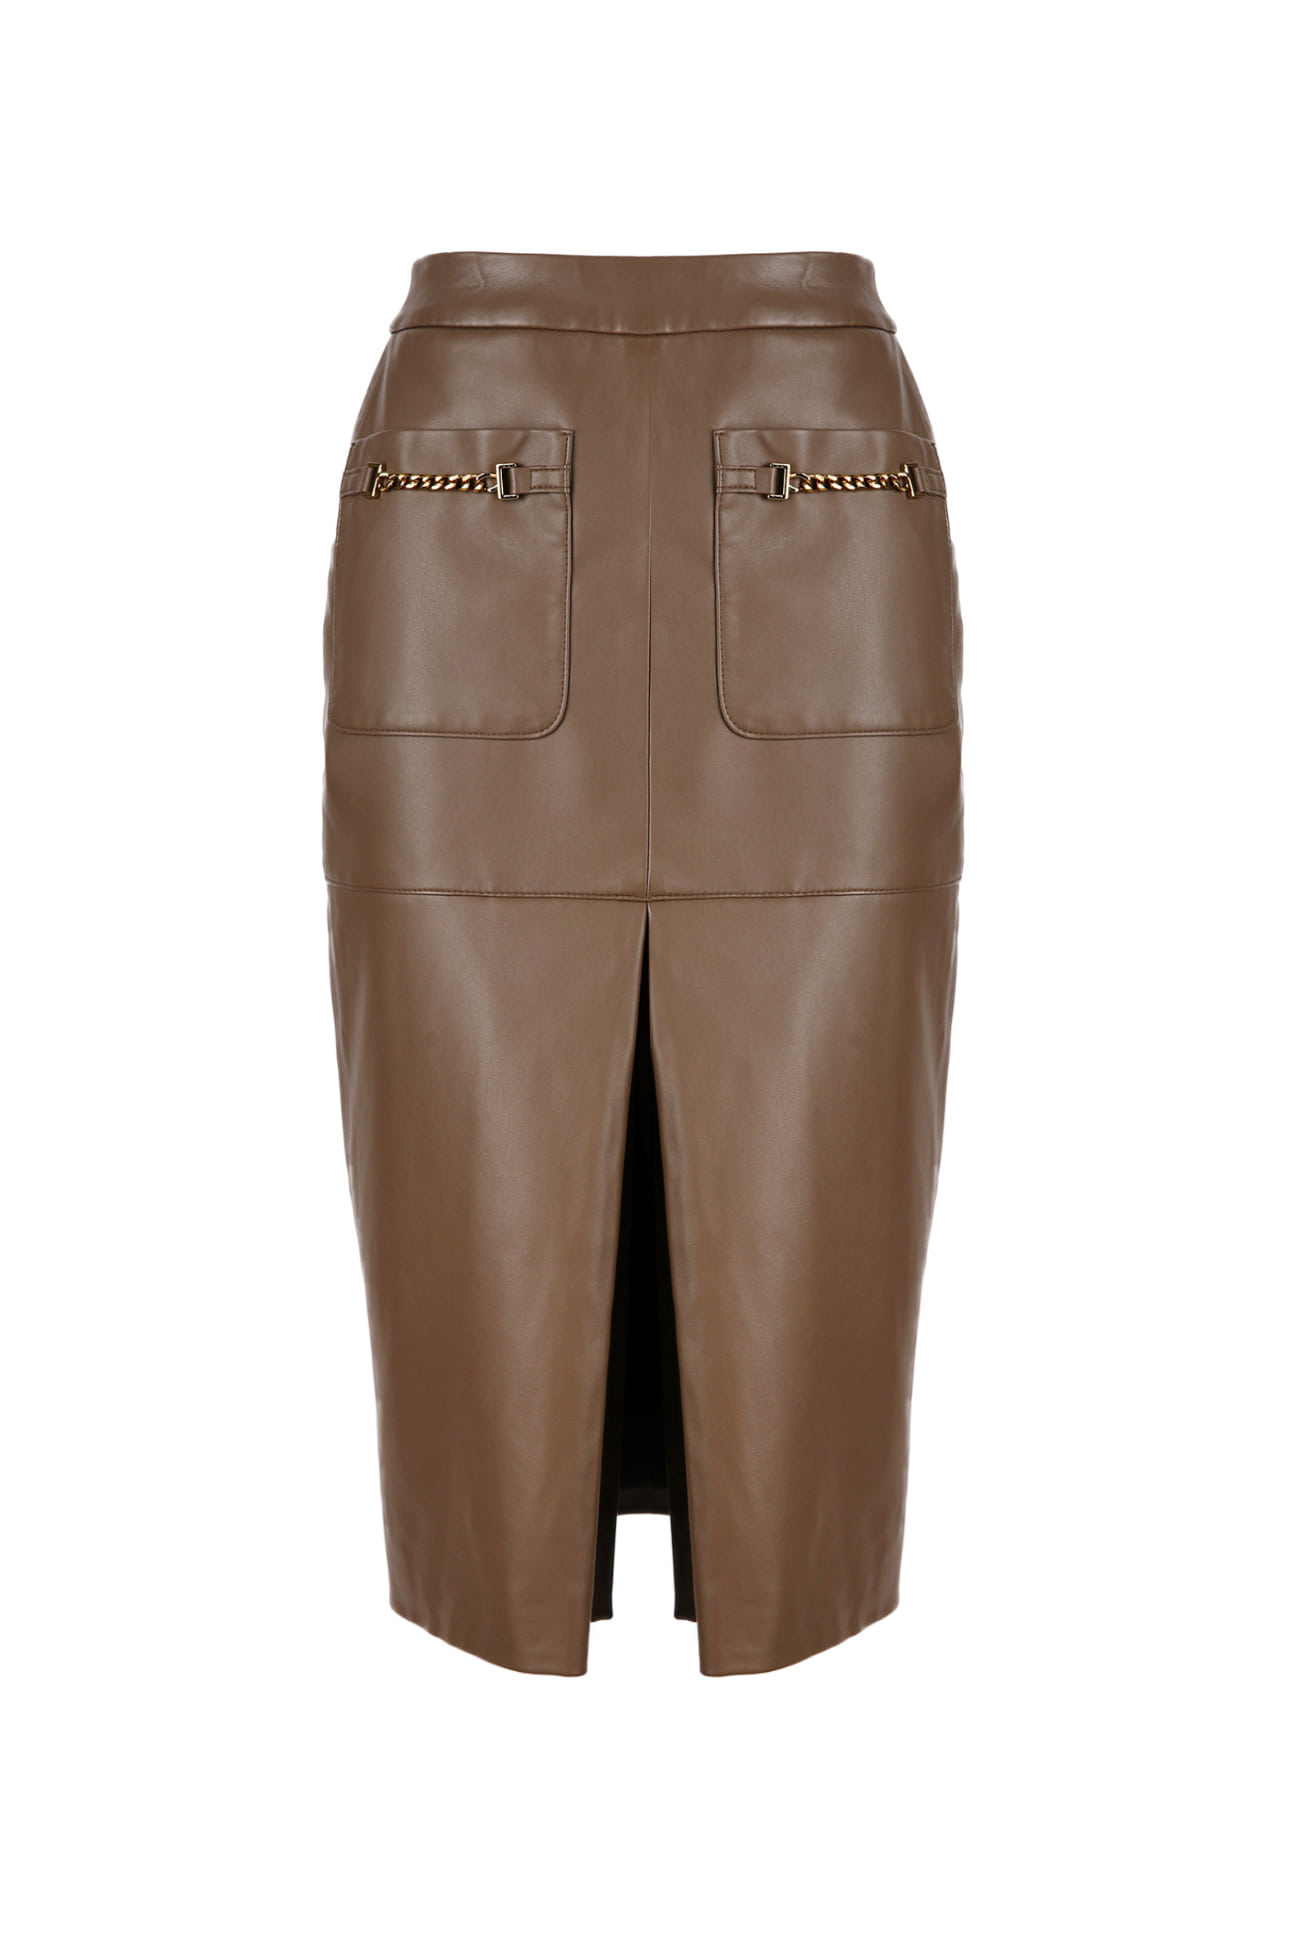 HIGH QUALITY LINE - HIGH QUALITY LINE - Classic hain leather skirt